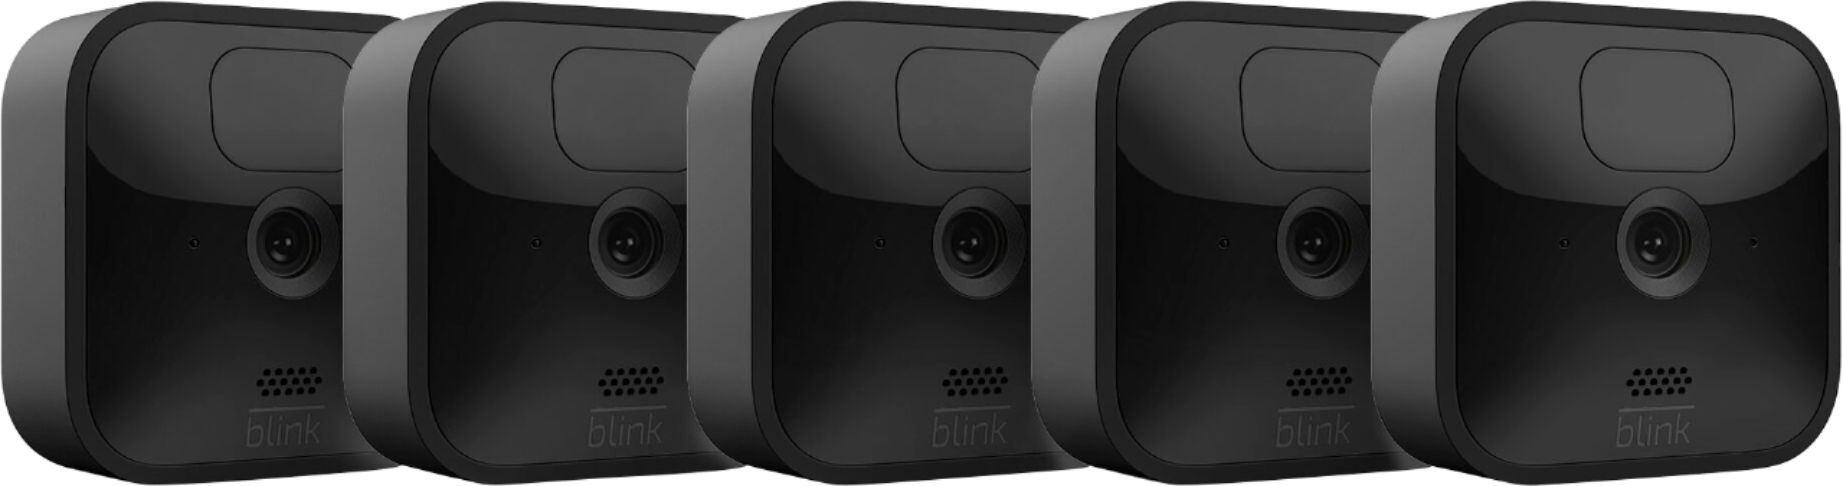 Blink 5 Camera Security System For Sale Off 63